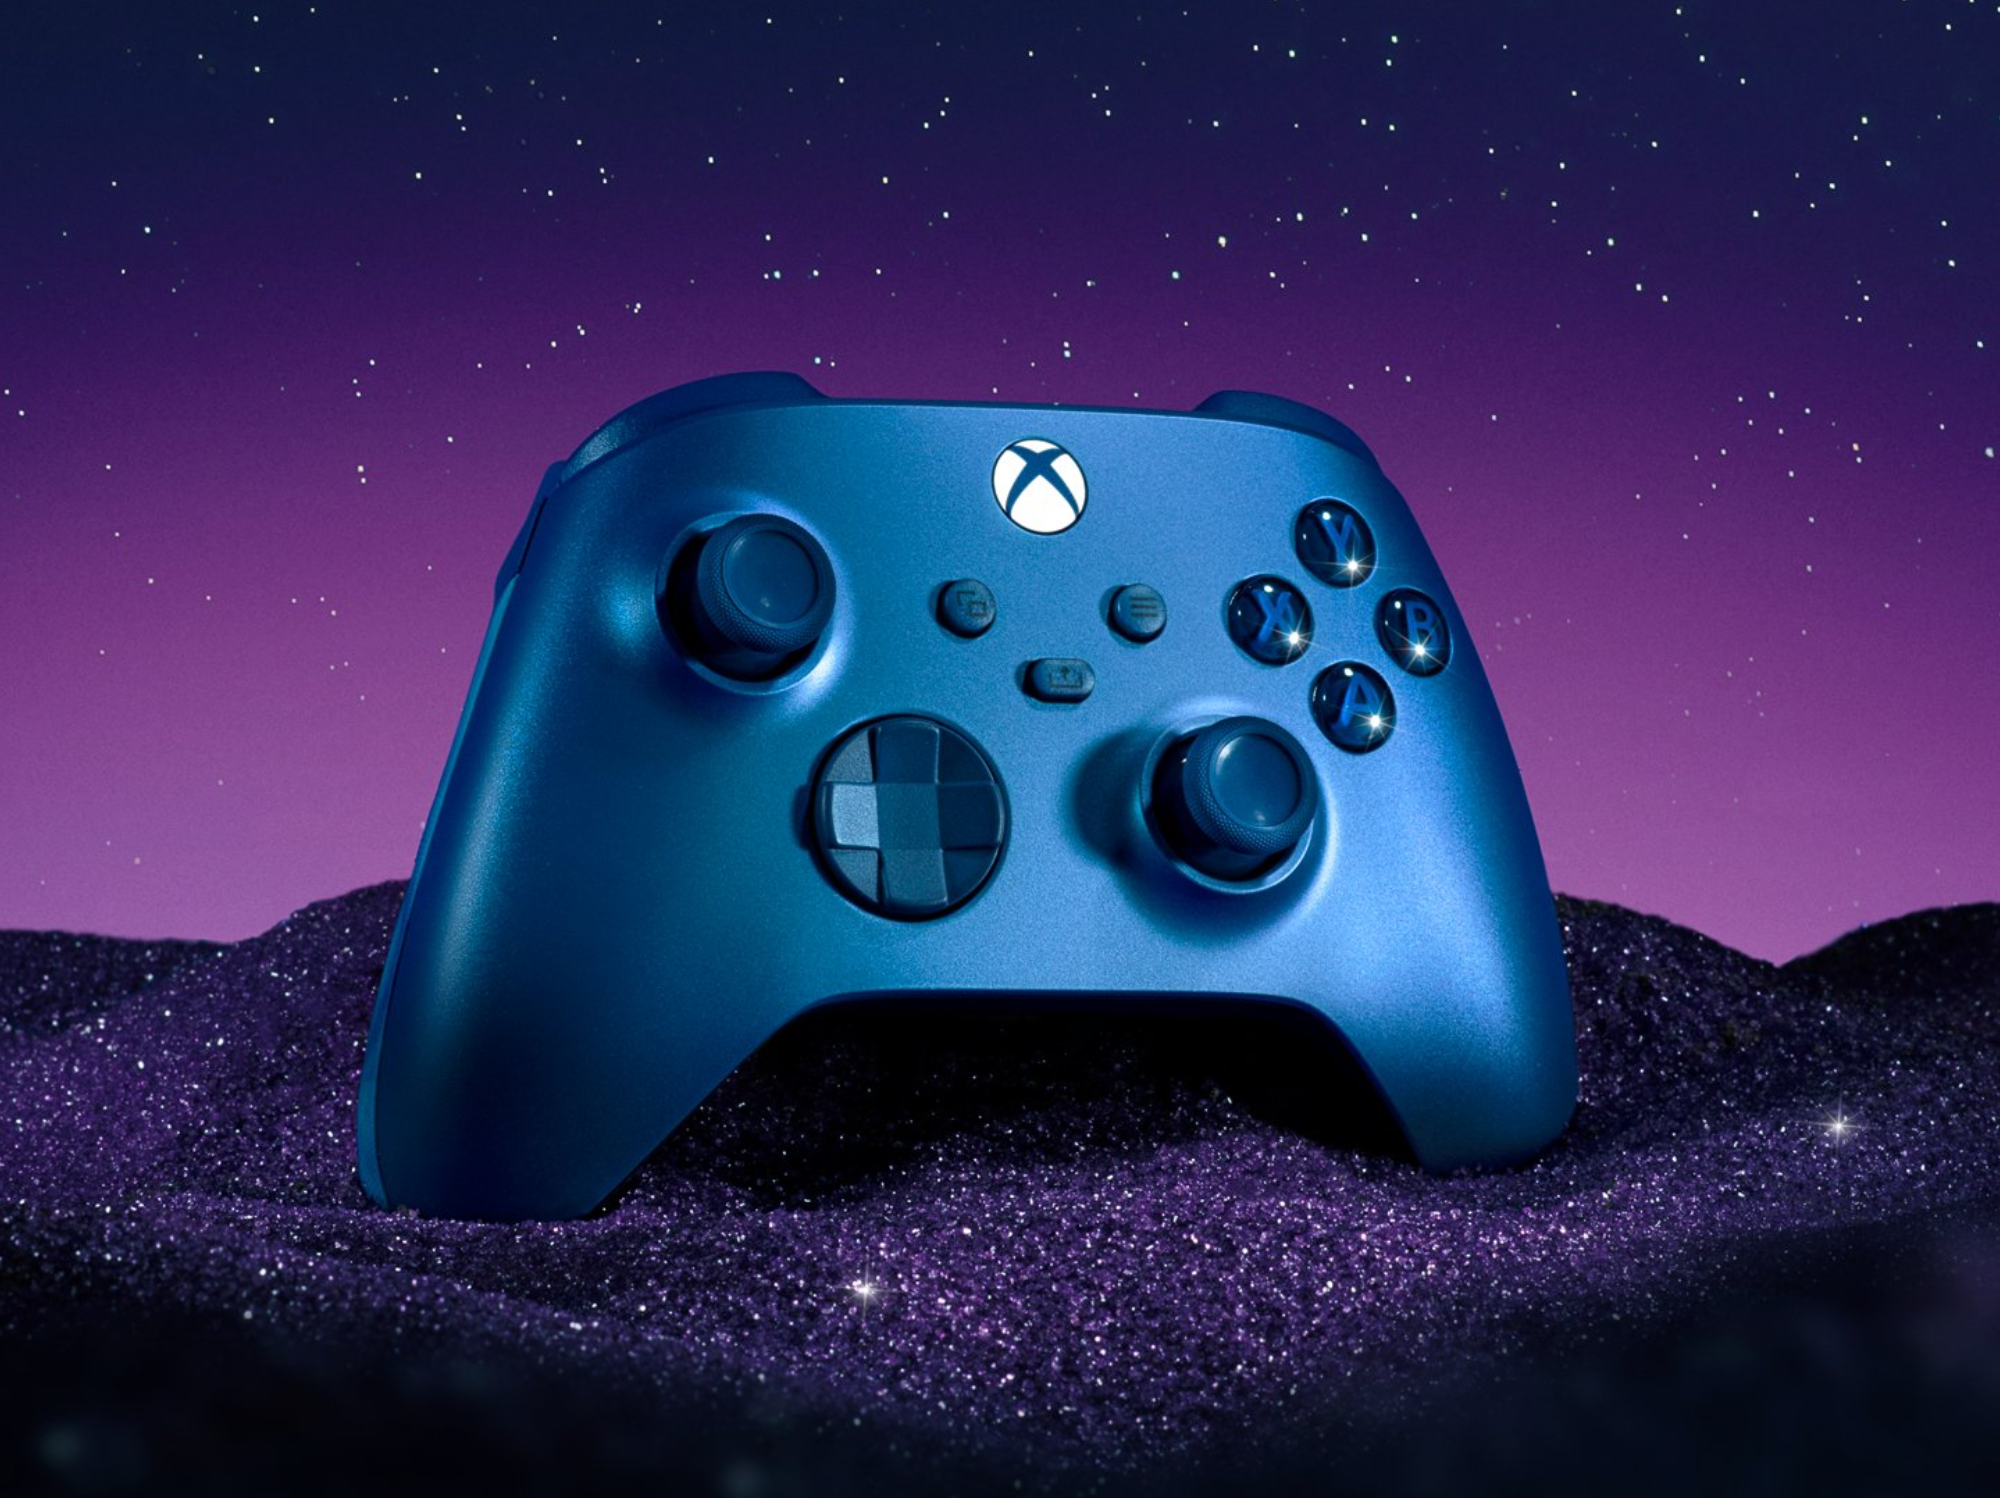 Meet the Special Edition Aqua Shift Xbox Controller